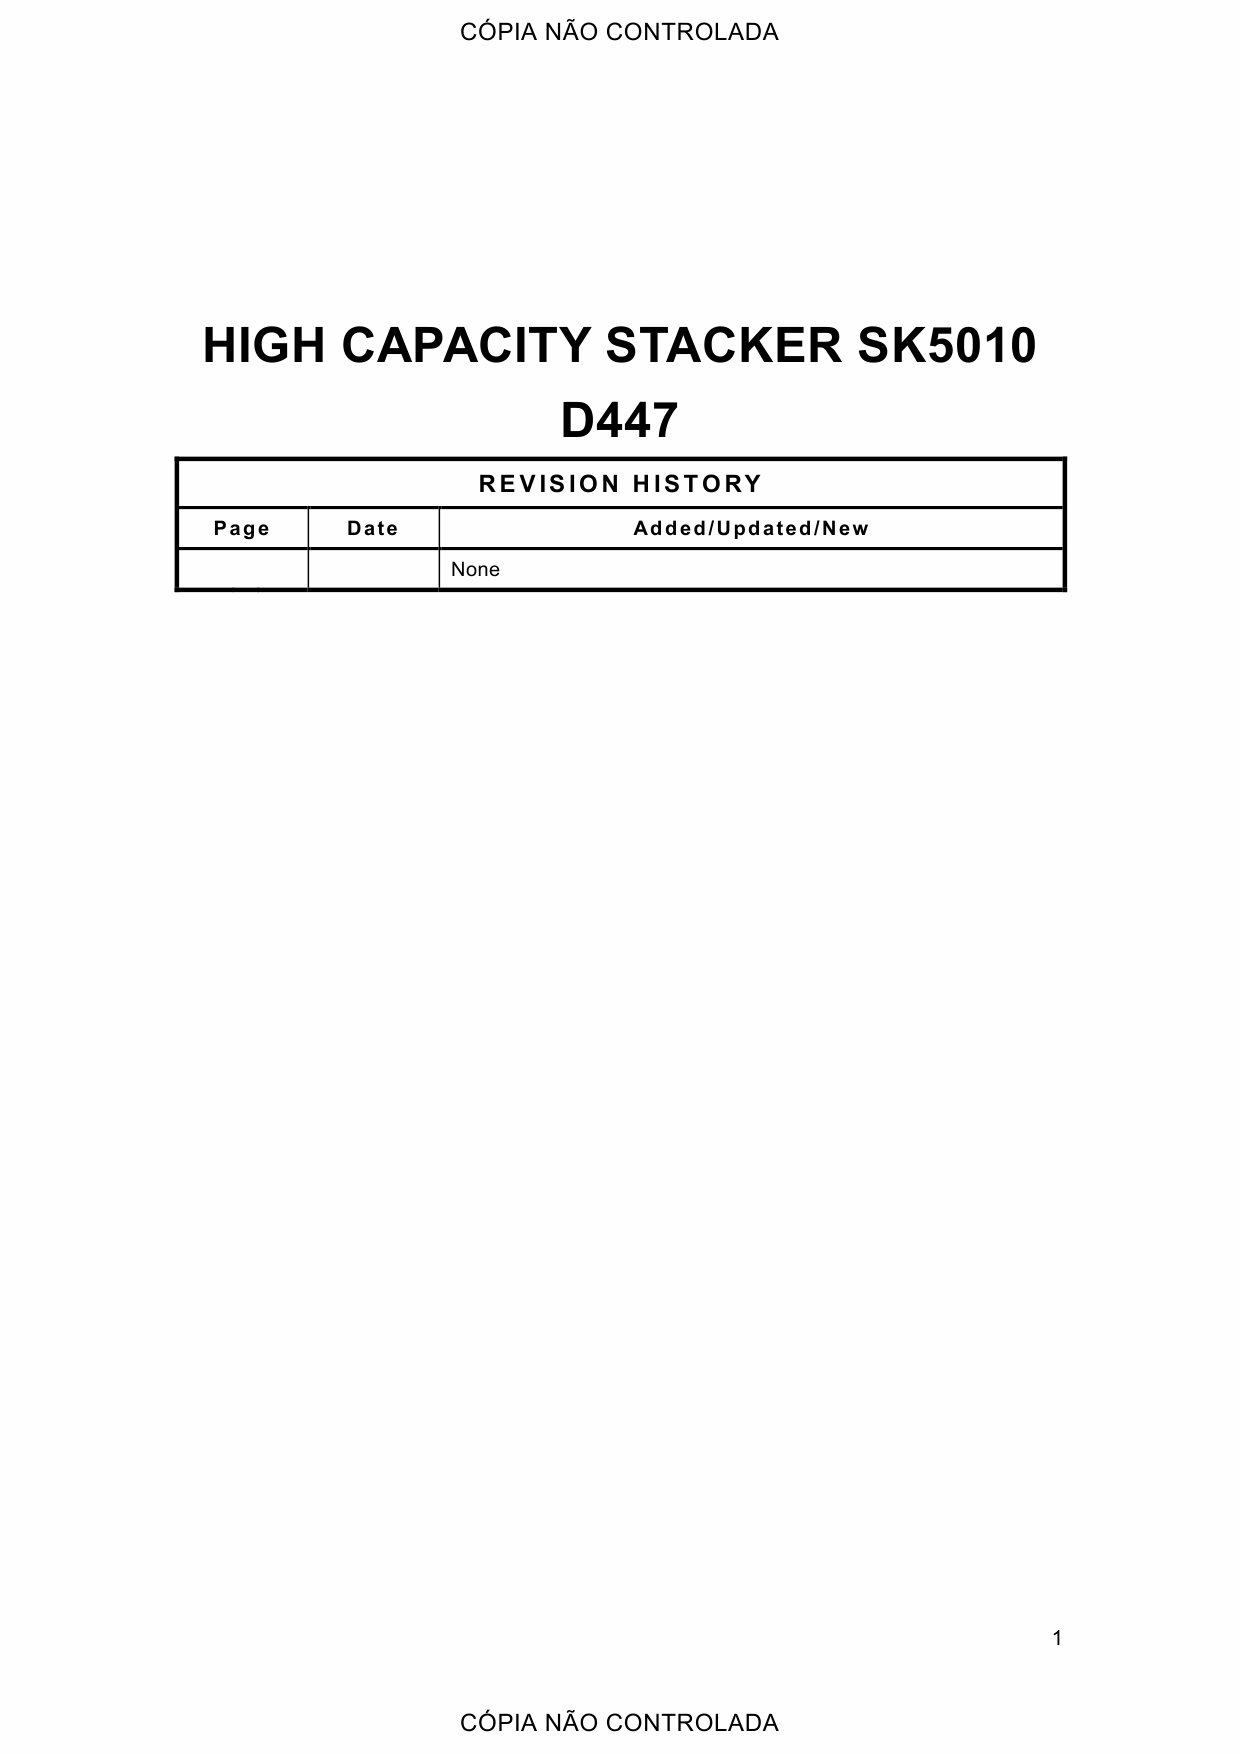 RICOH Options D447 HIGH-CAPACITY-STACKER Parts Catalog PDF download-1